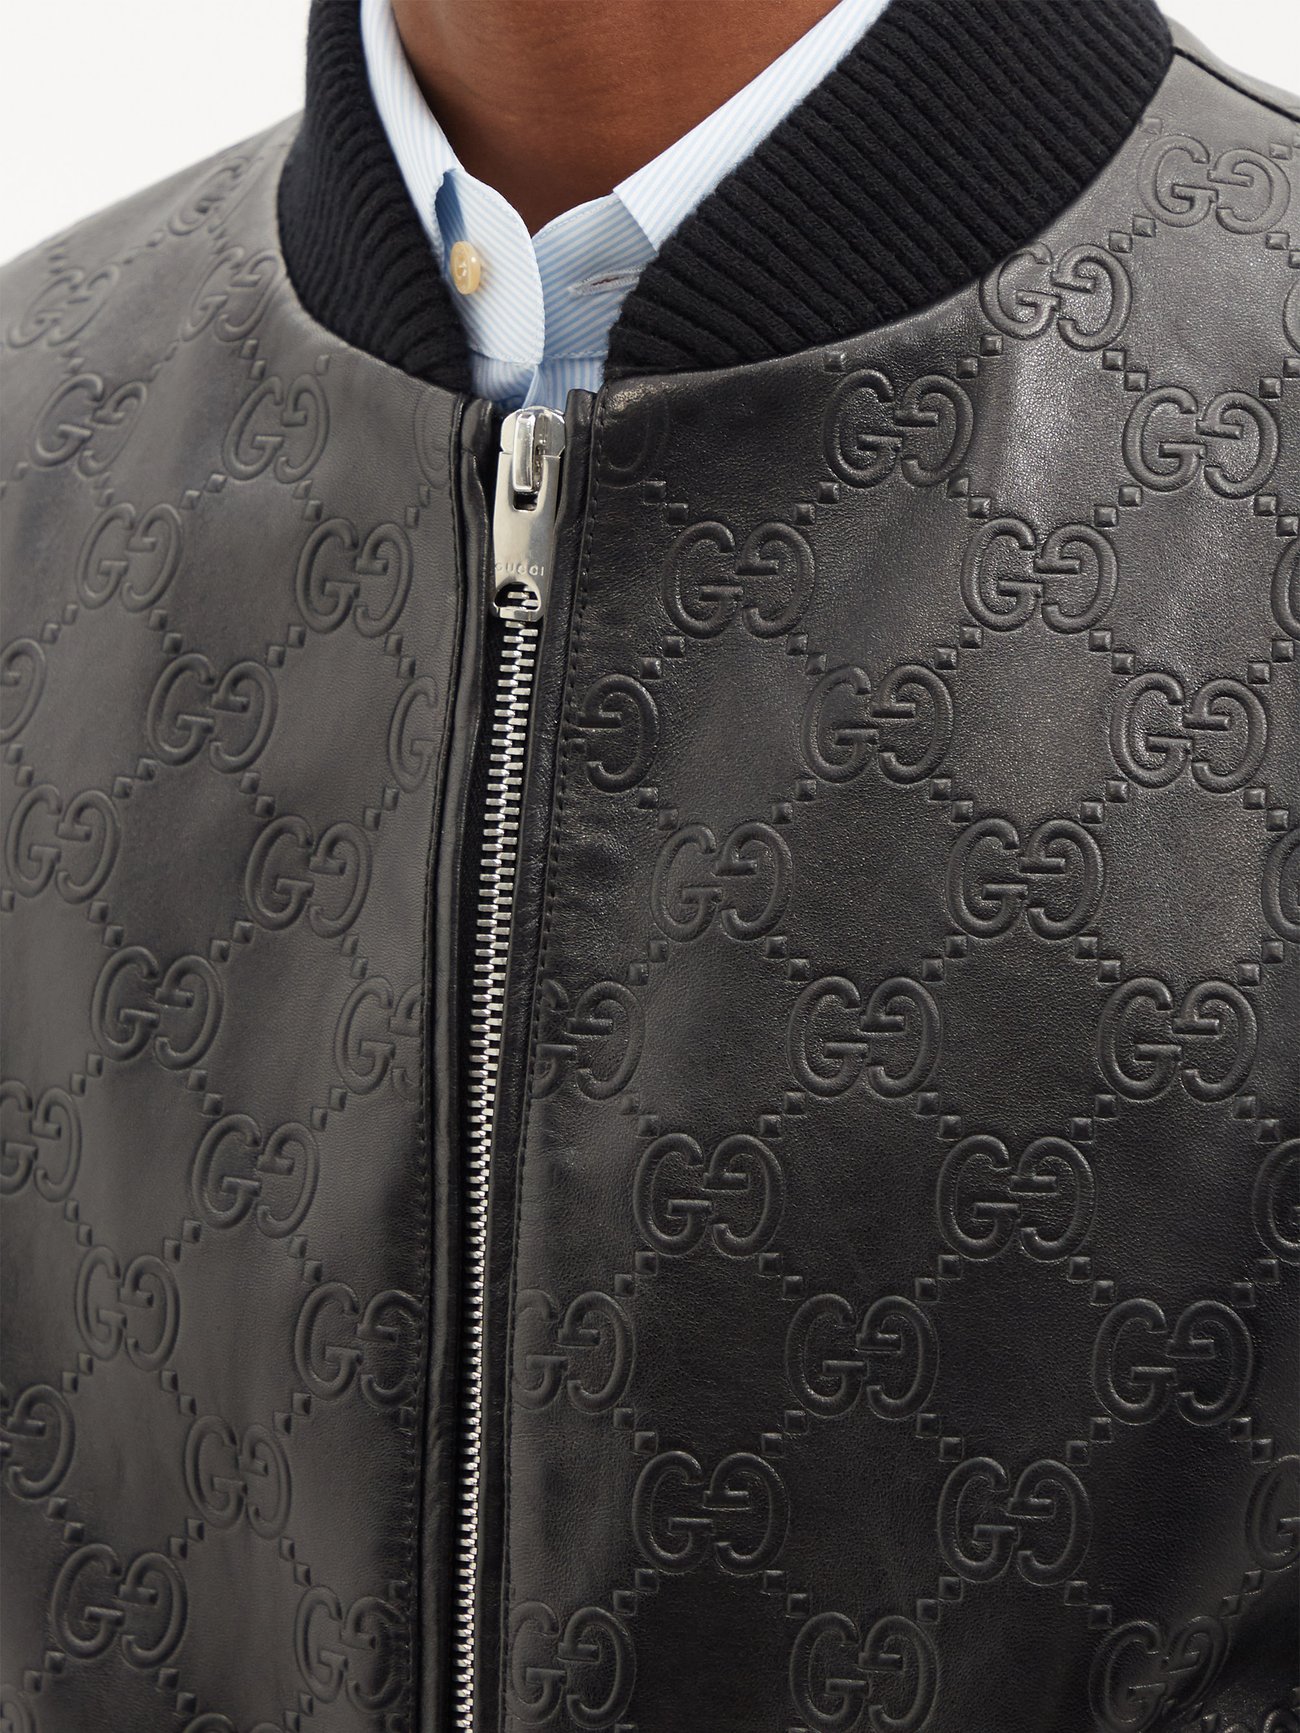 Gucci Embossed GG Leather Bomber Jacket, It 36 | Elysewalker